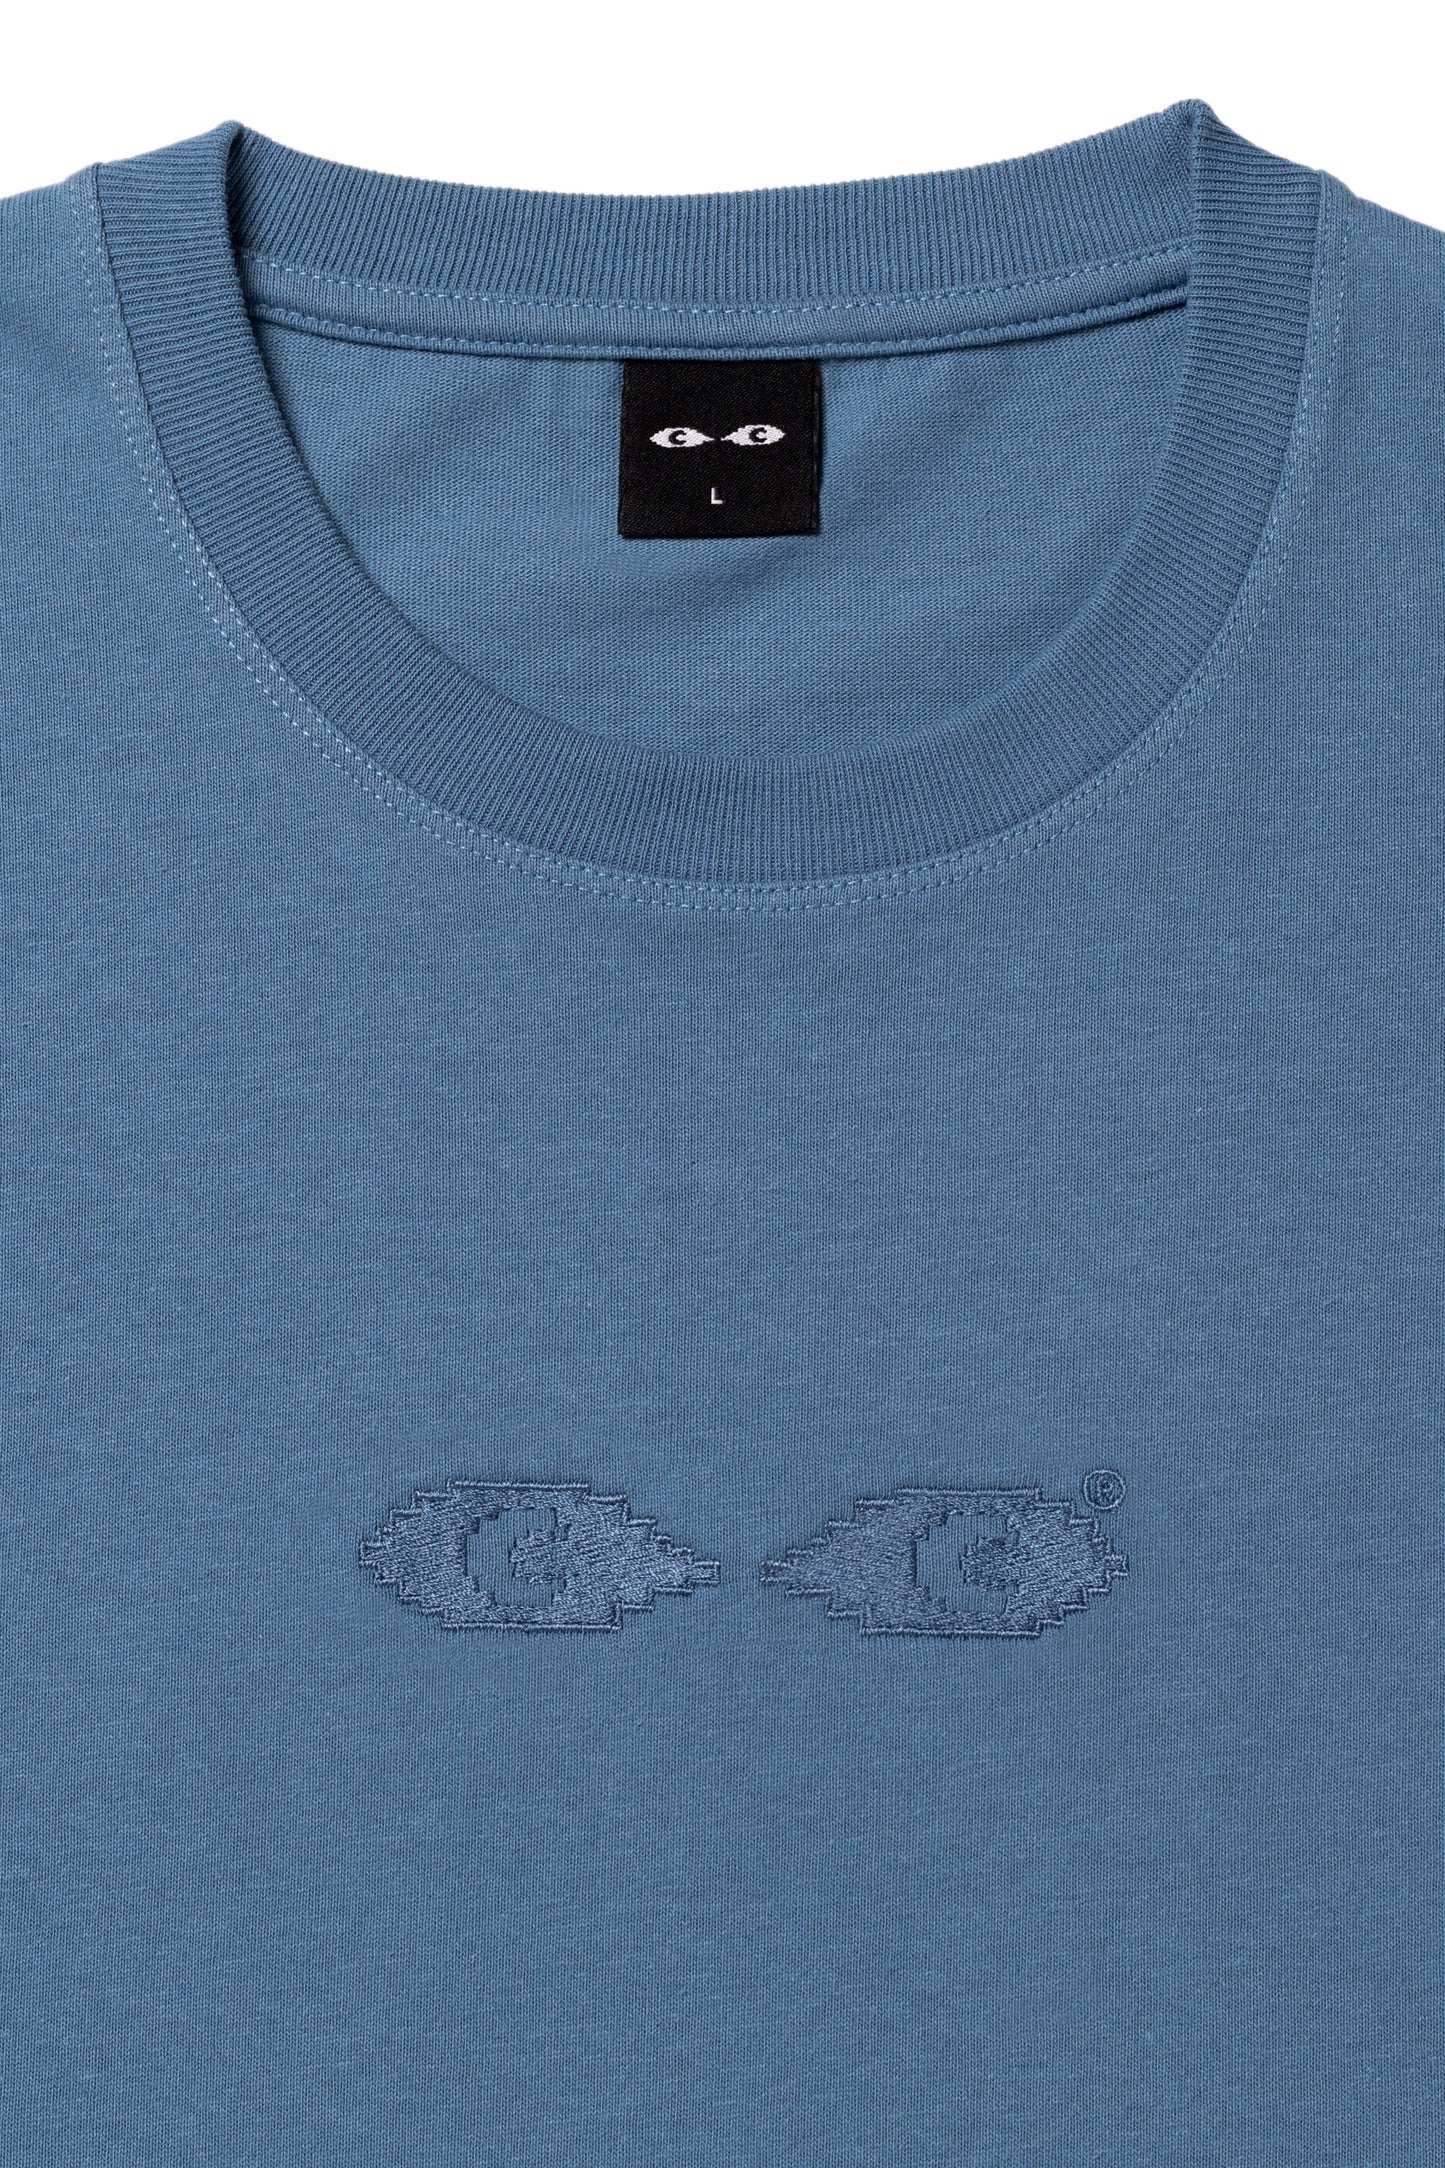 Embroidery Logo Tee - Dusty Blue